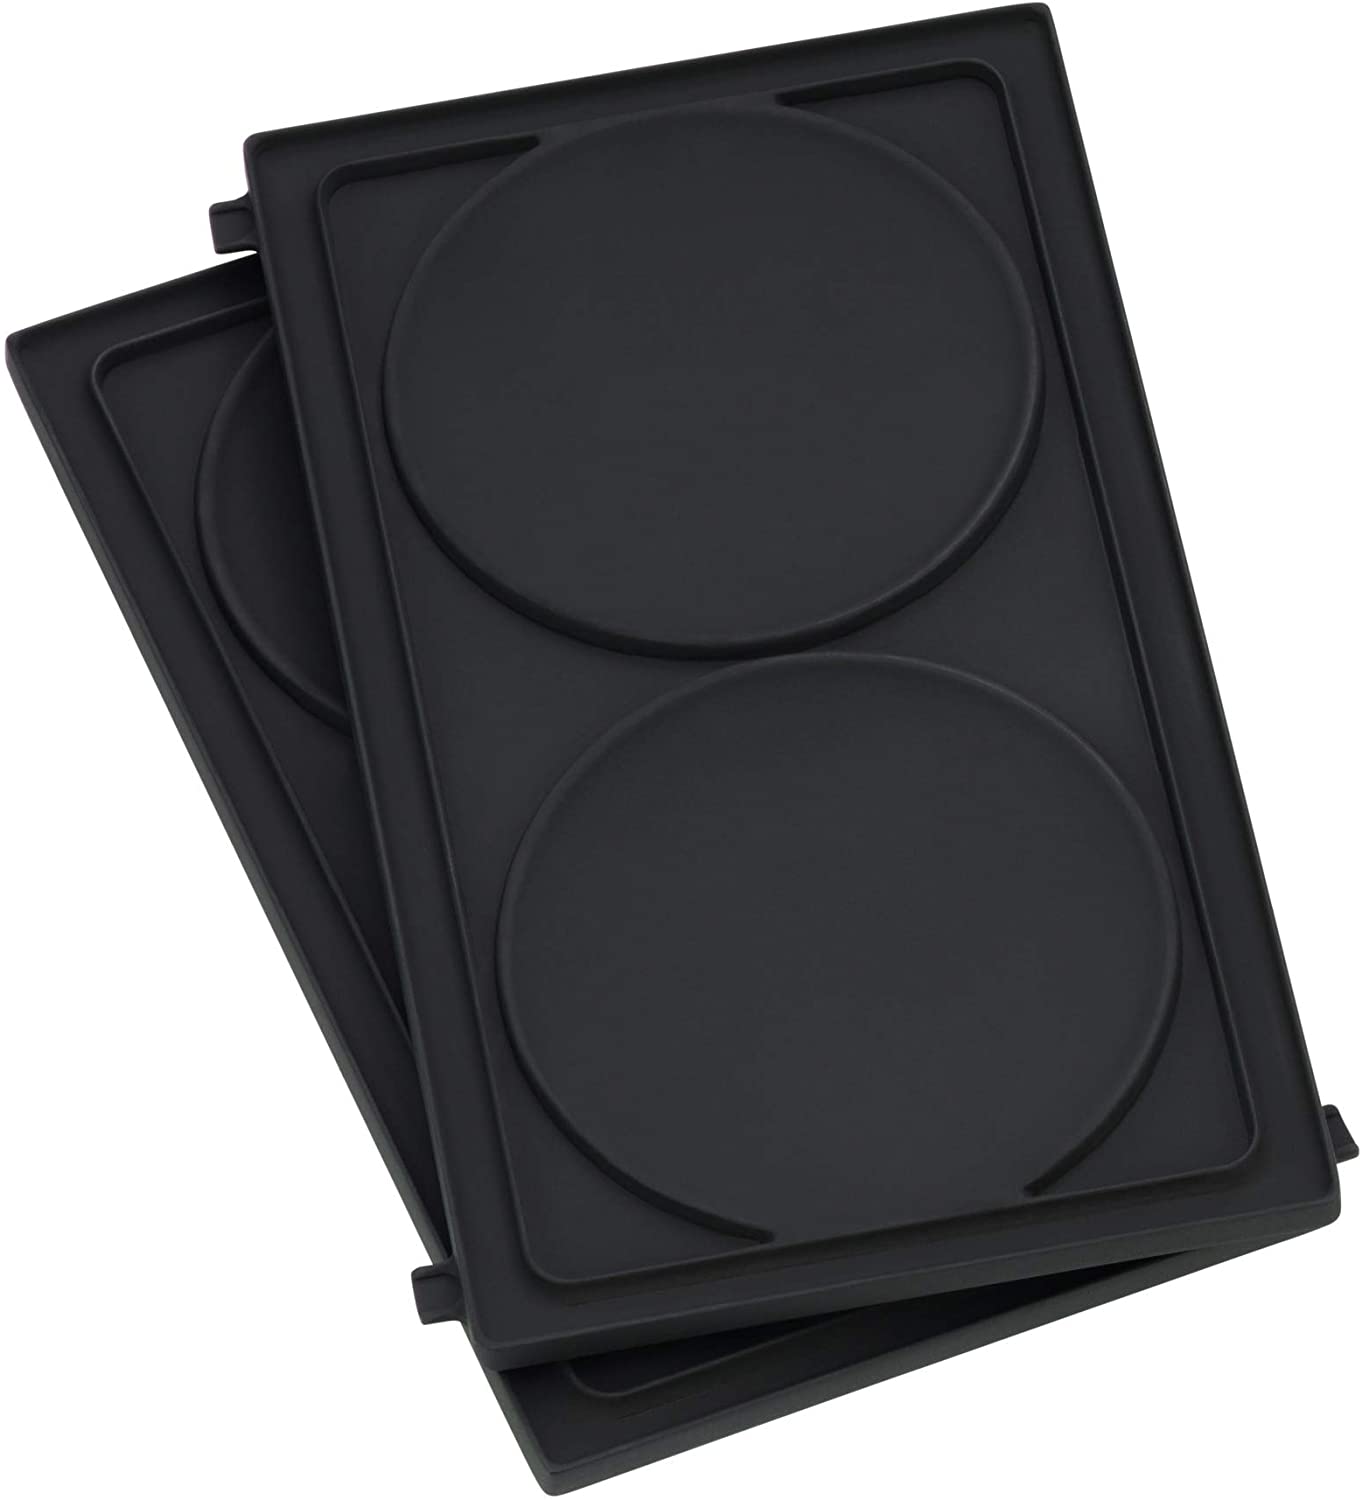 WMF Lono Snack Master Accessories, Pancake Plate Set, 2 Removable Plate Sets, Non-Stick